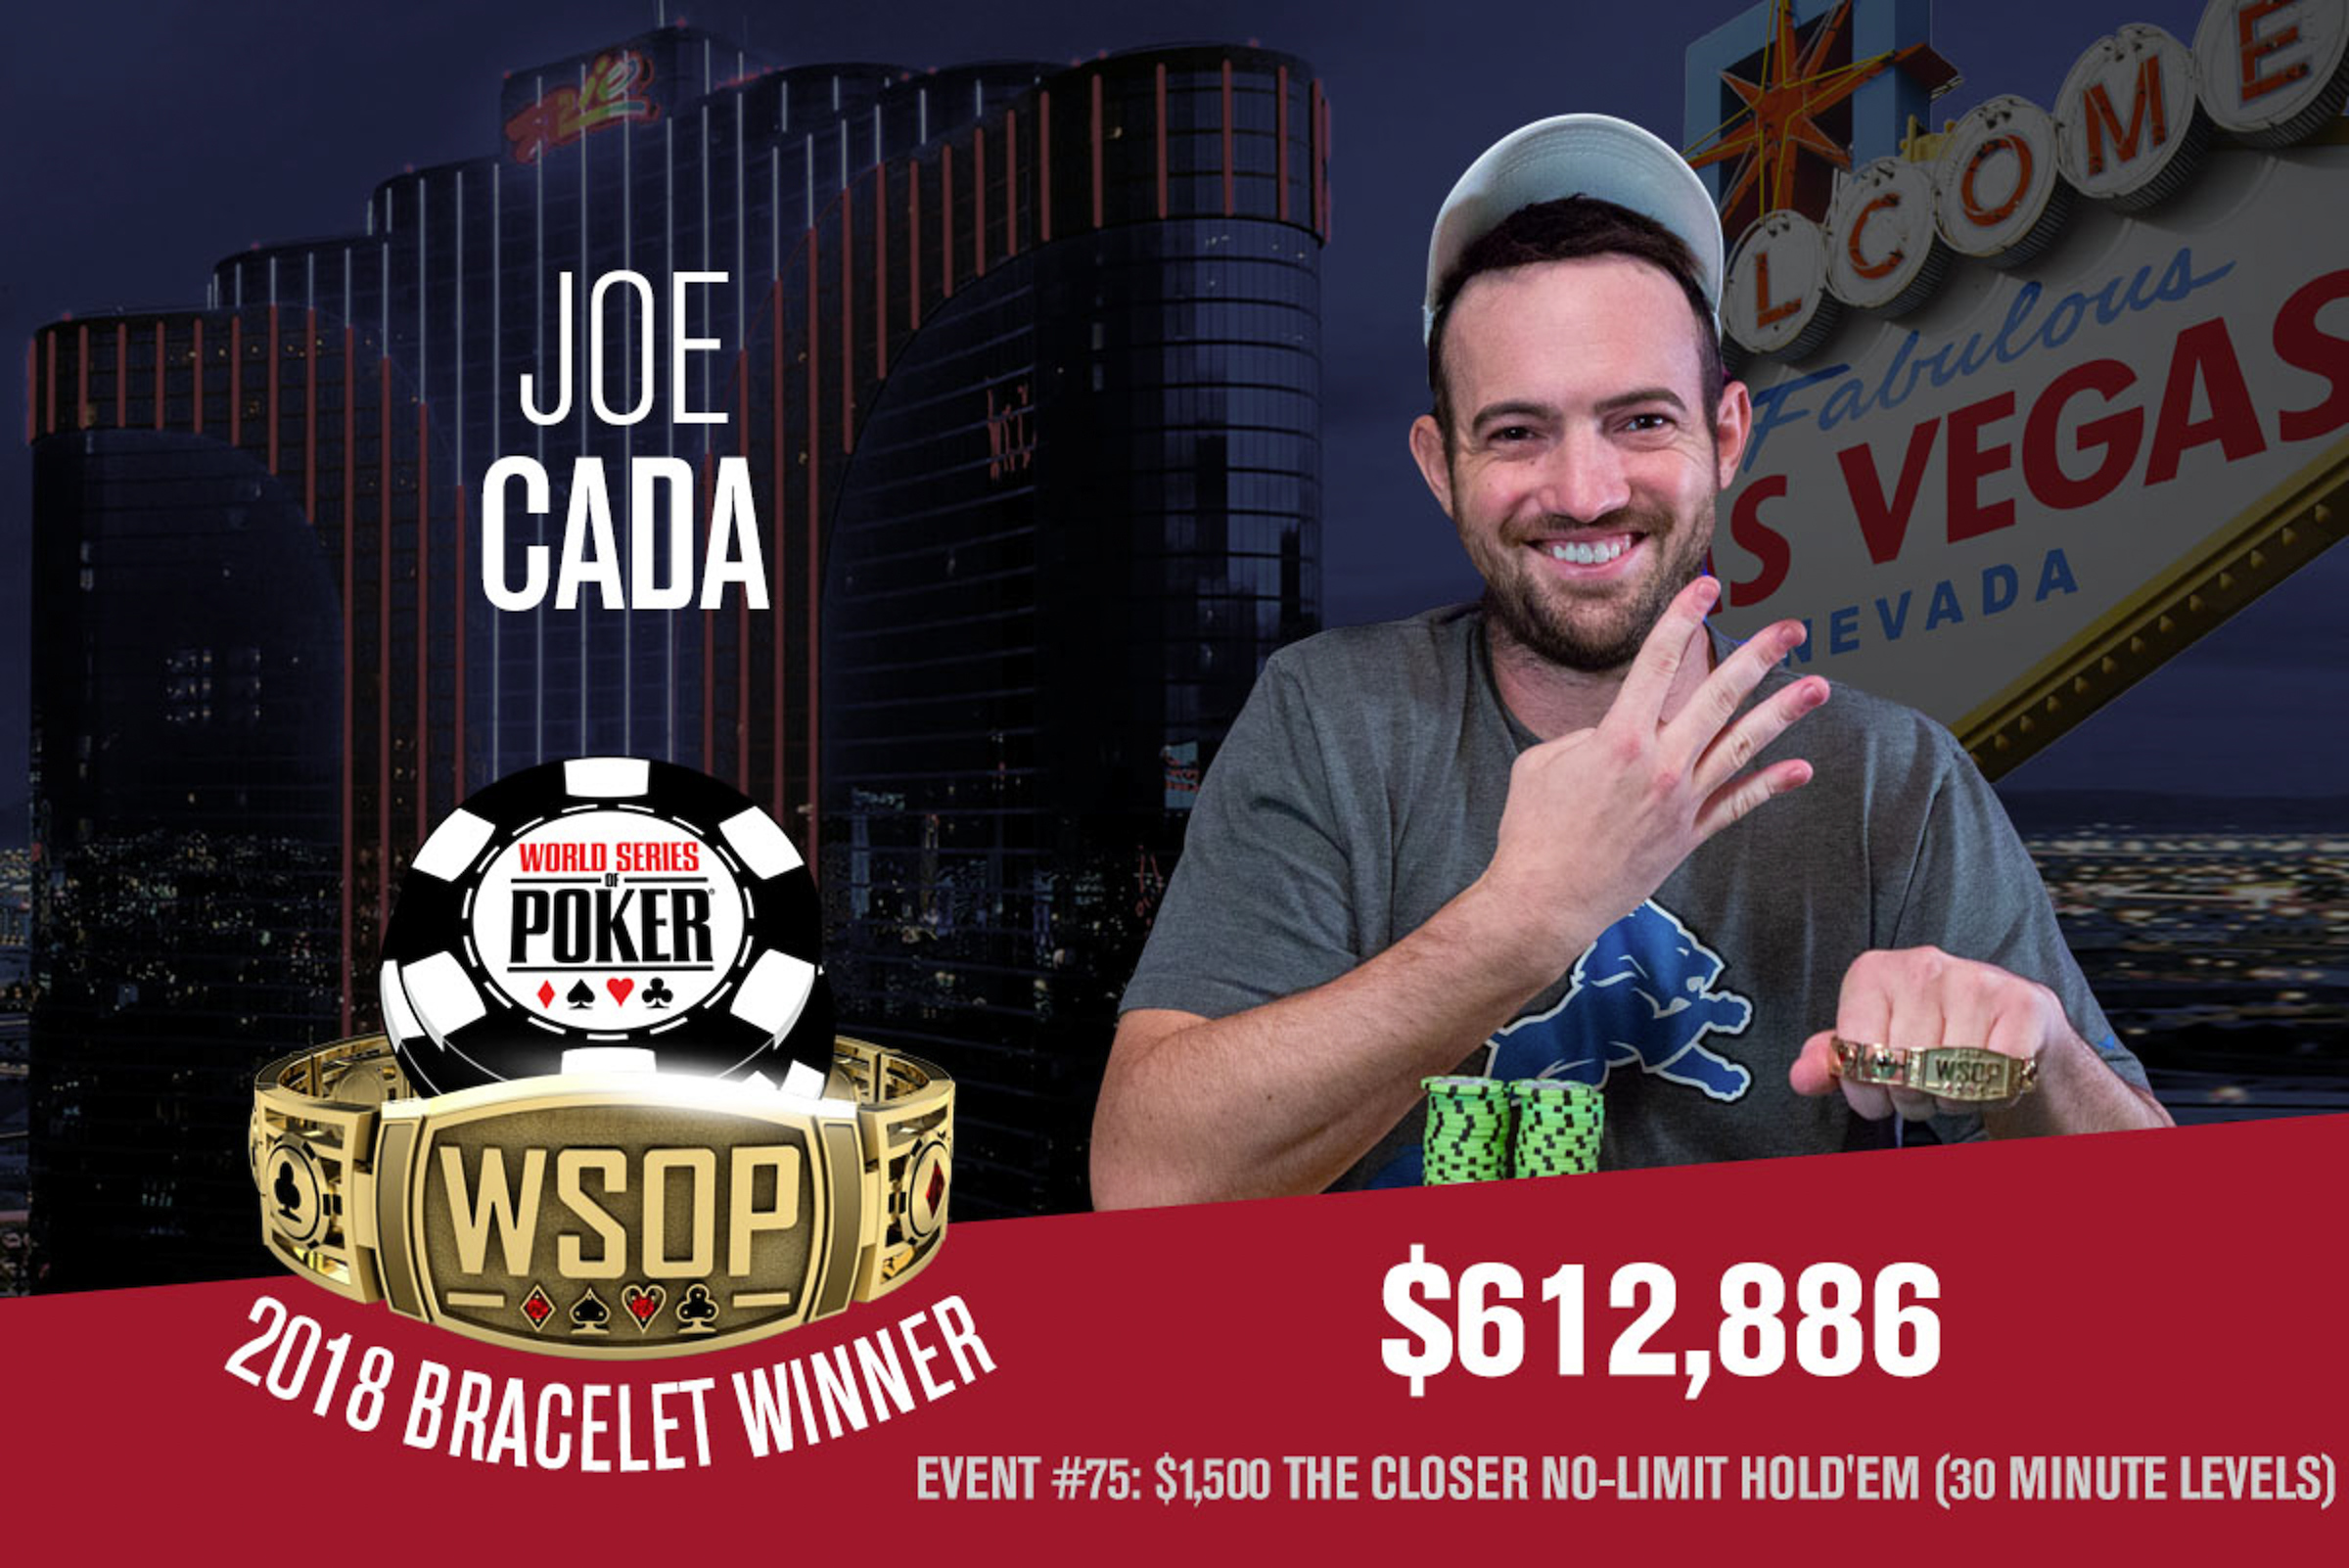 Joe Cada Wins Second 2018 WSOP Bracelet in “The Closer” Days After Final Tabling Main Event